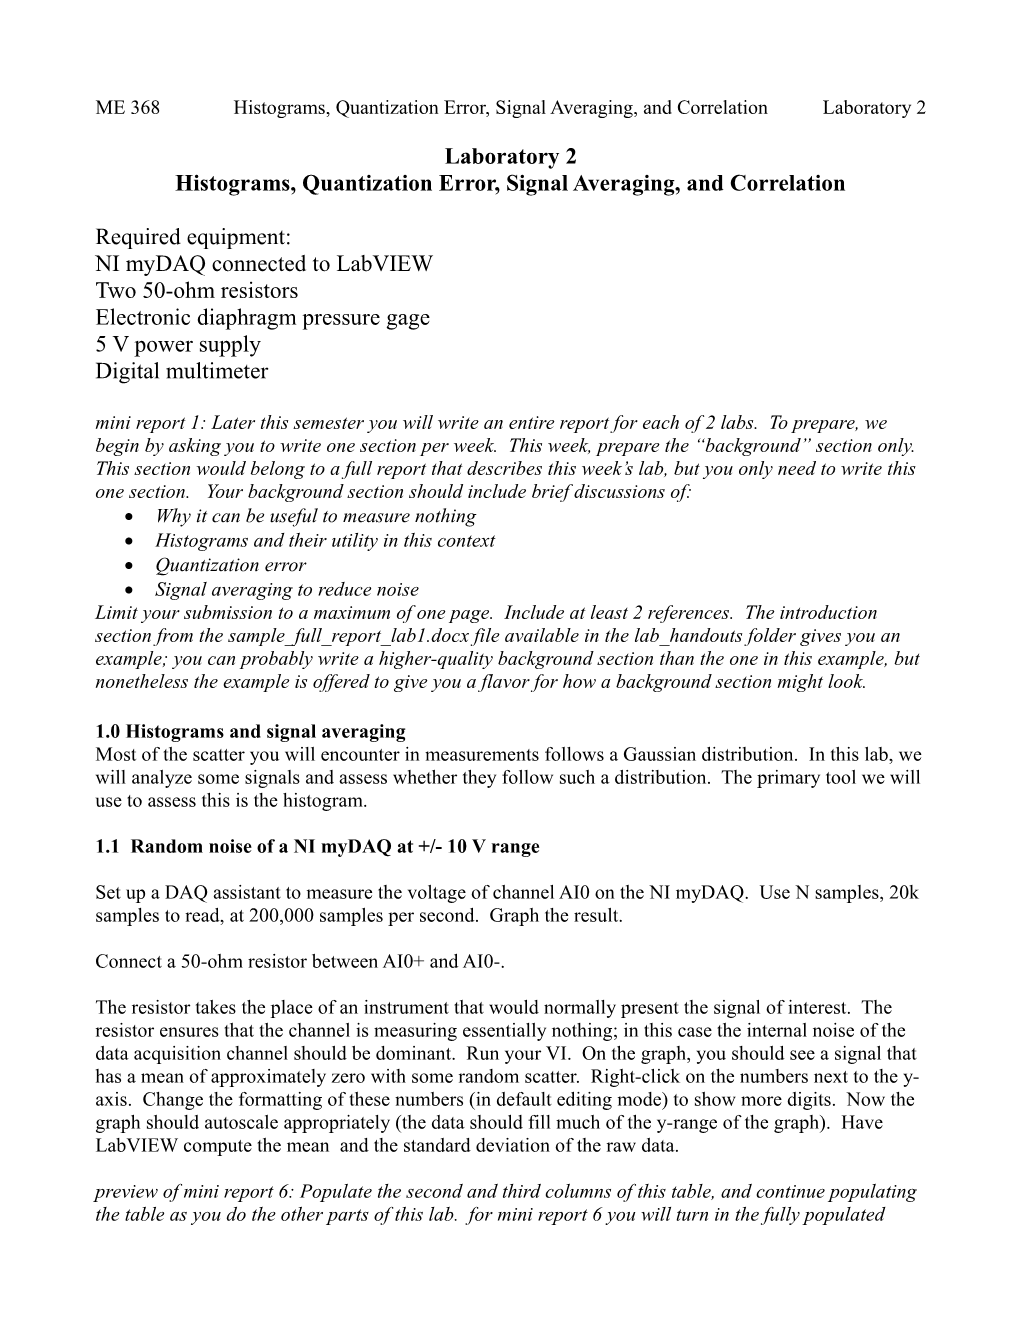 Histograms, Quantization Error, Signal Averaging, and Correlation